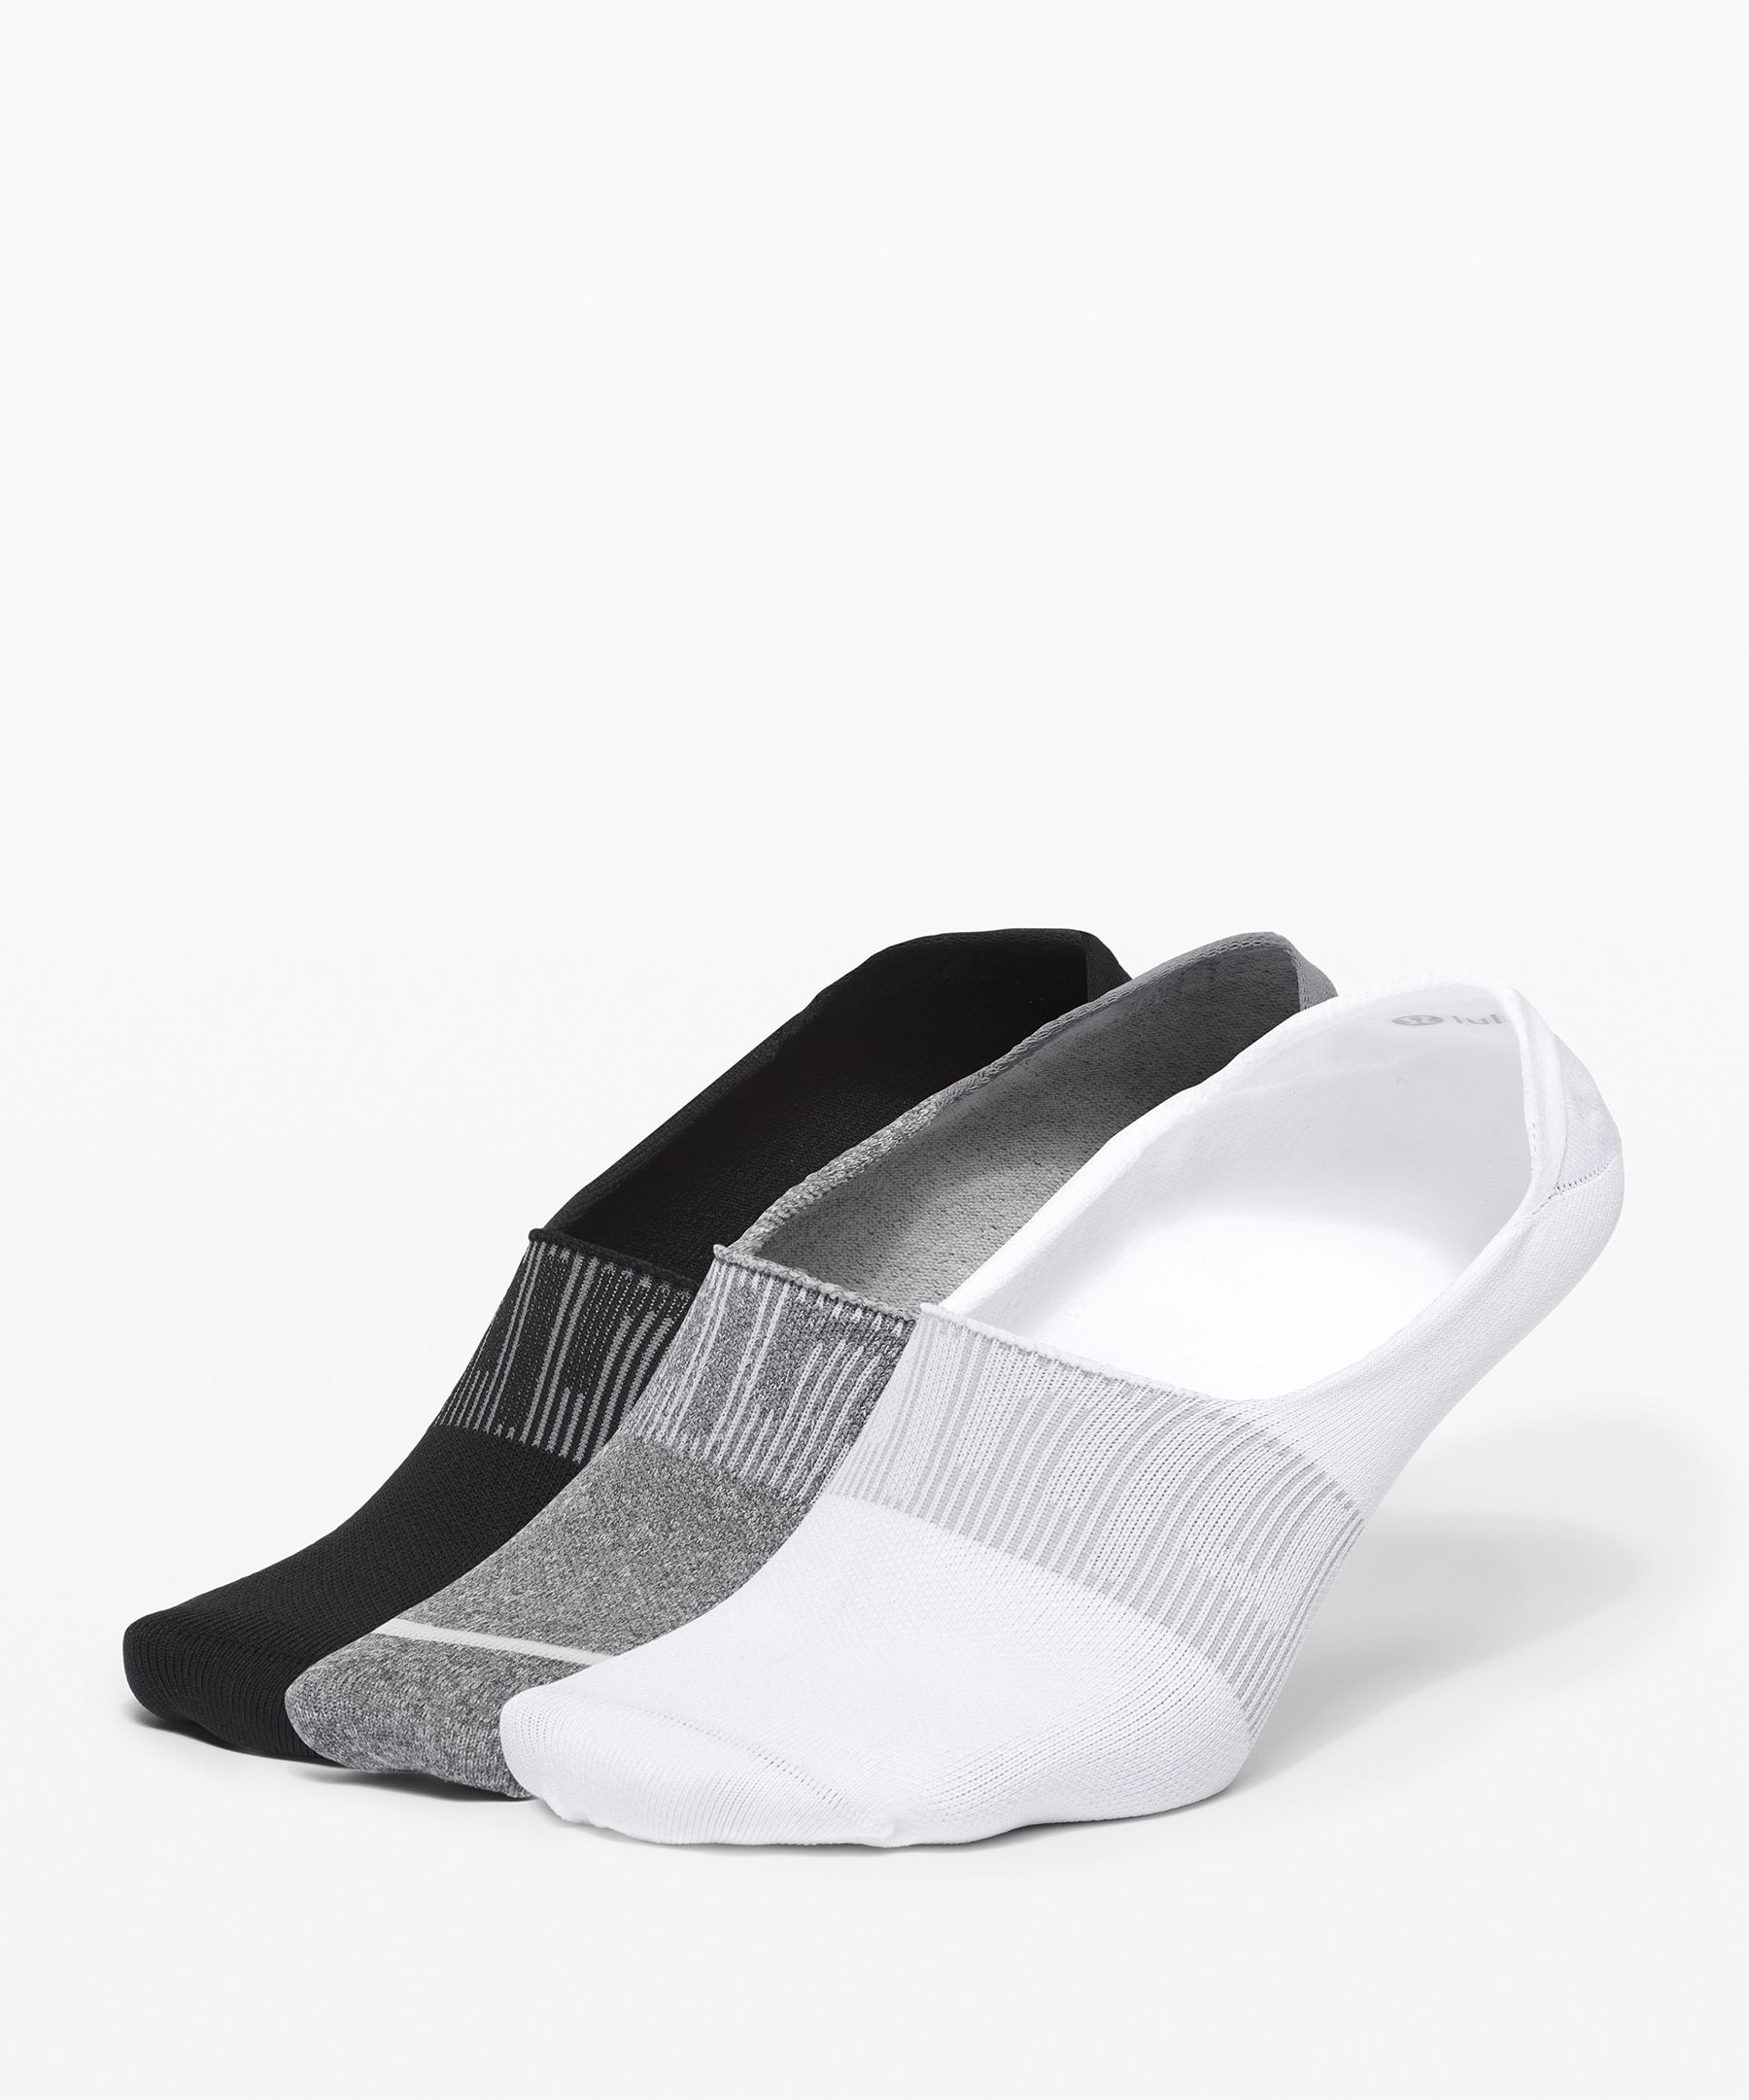 Lululemon Daily Stride No-show Socks 3 Pack In White/heather Grey/black